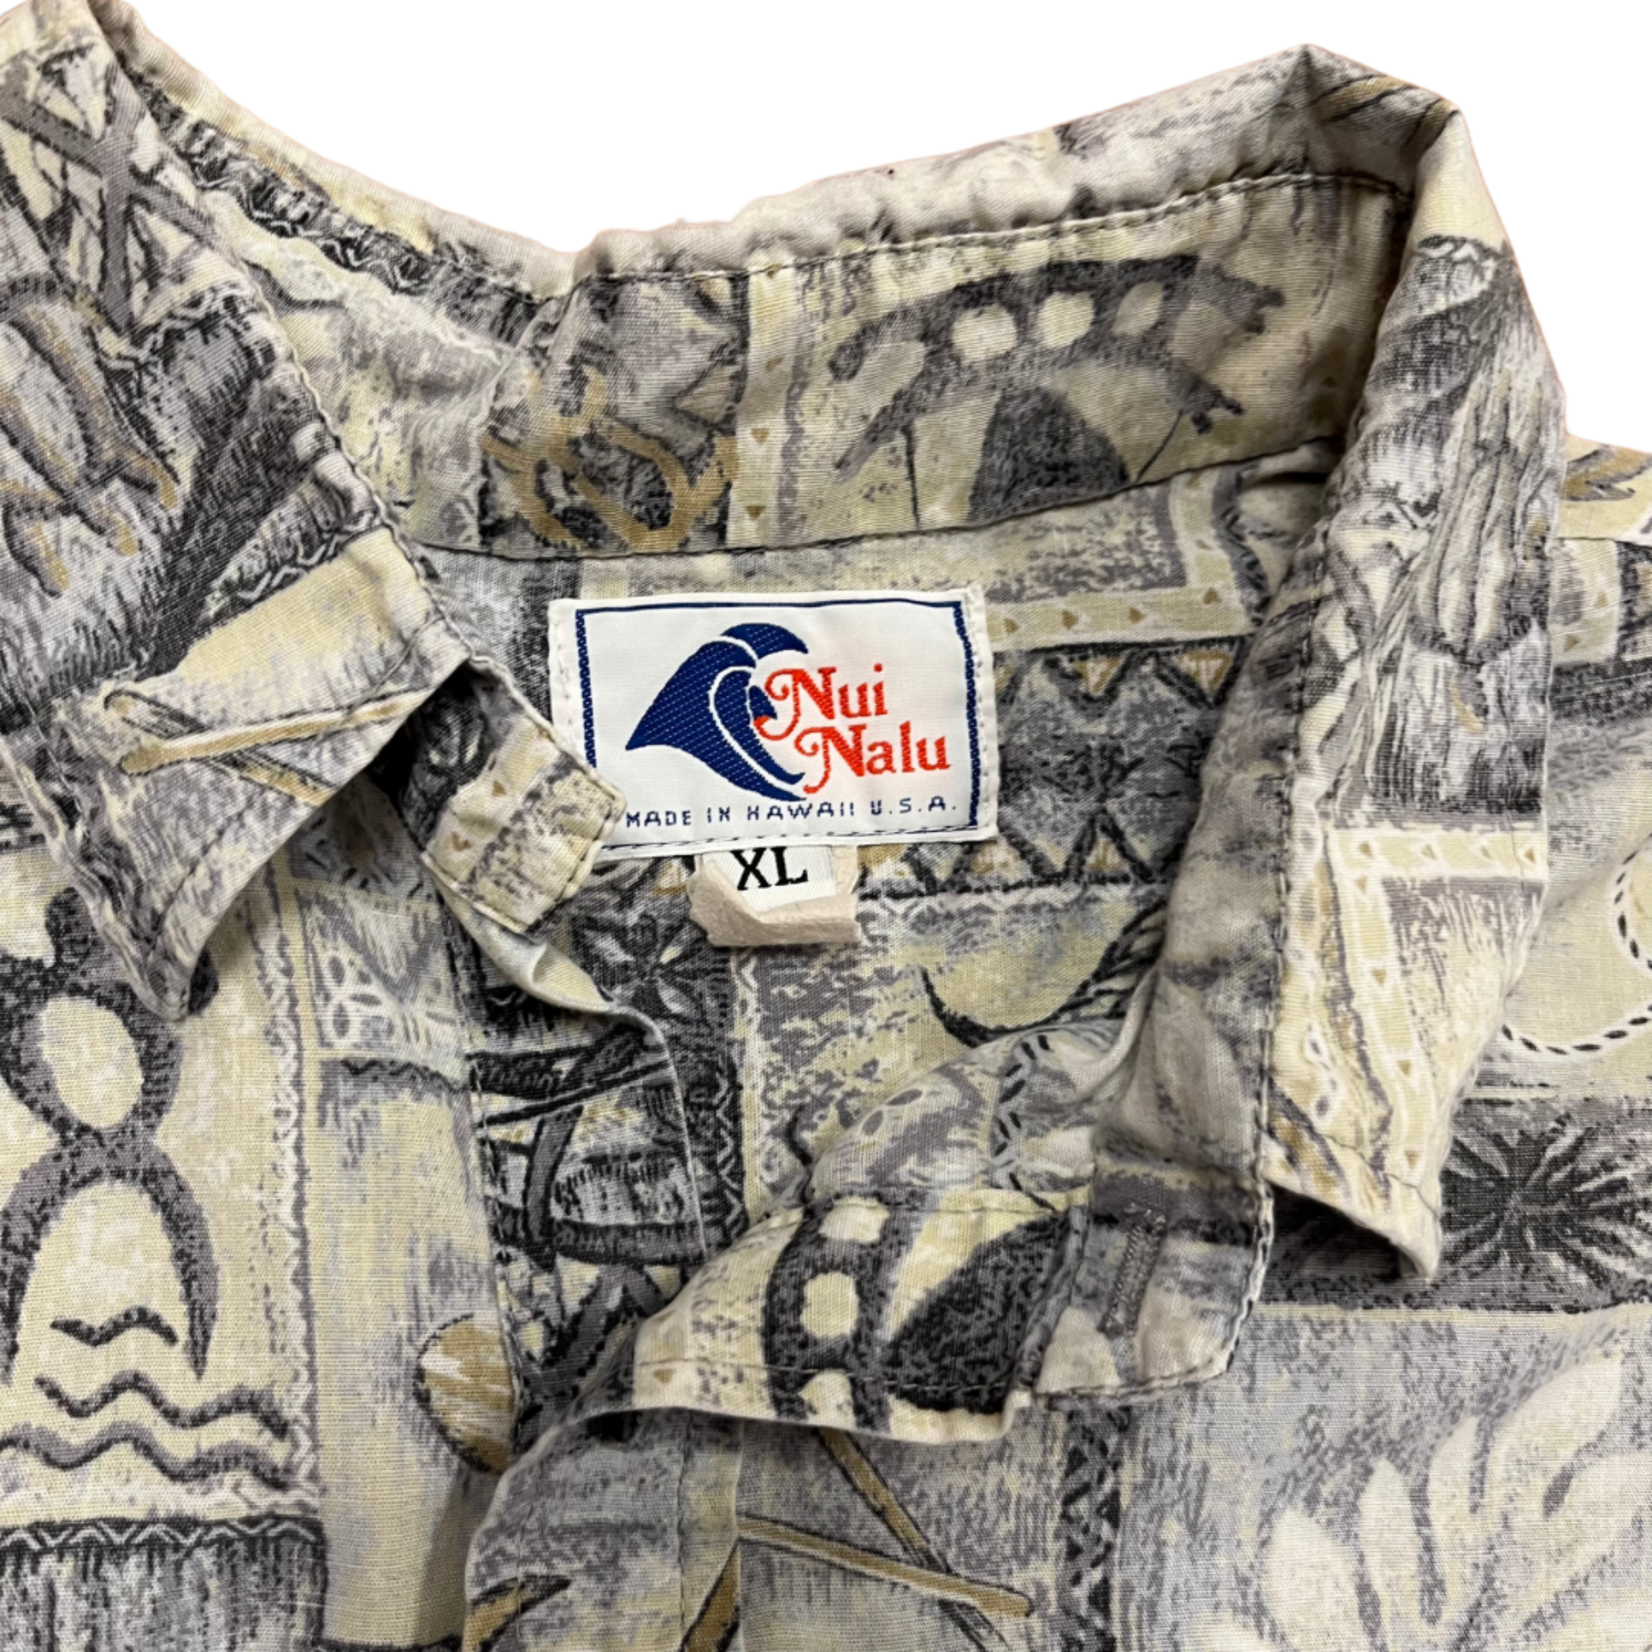 Mission Zero Men’s Vintage Aloha Shirt - Nui Nalu - Throw Net, Canoe, Fishhook - XL